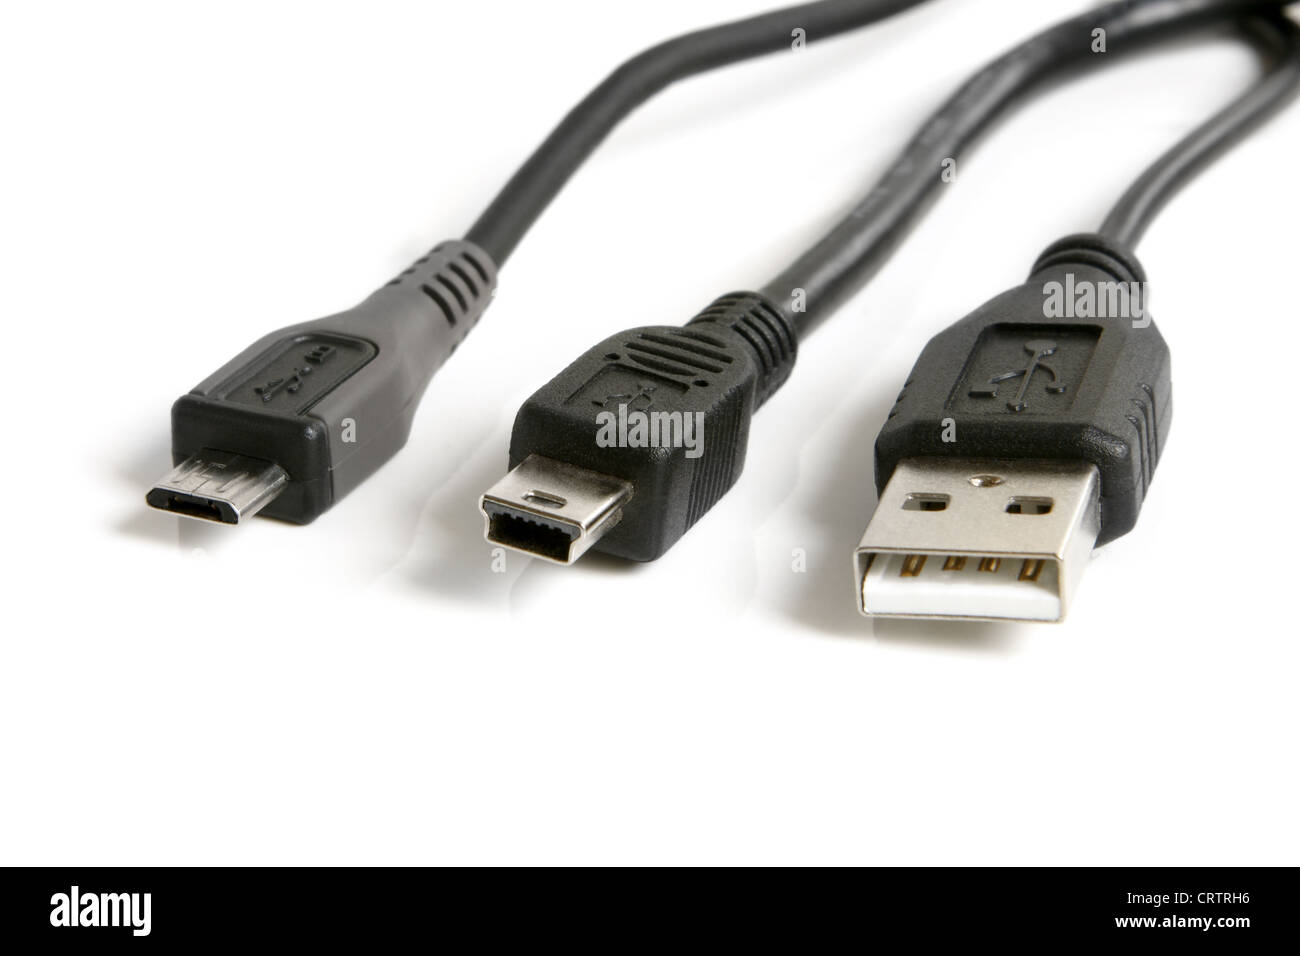 USB, mini-USB and micro-USB cables Stock Photo